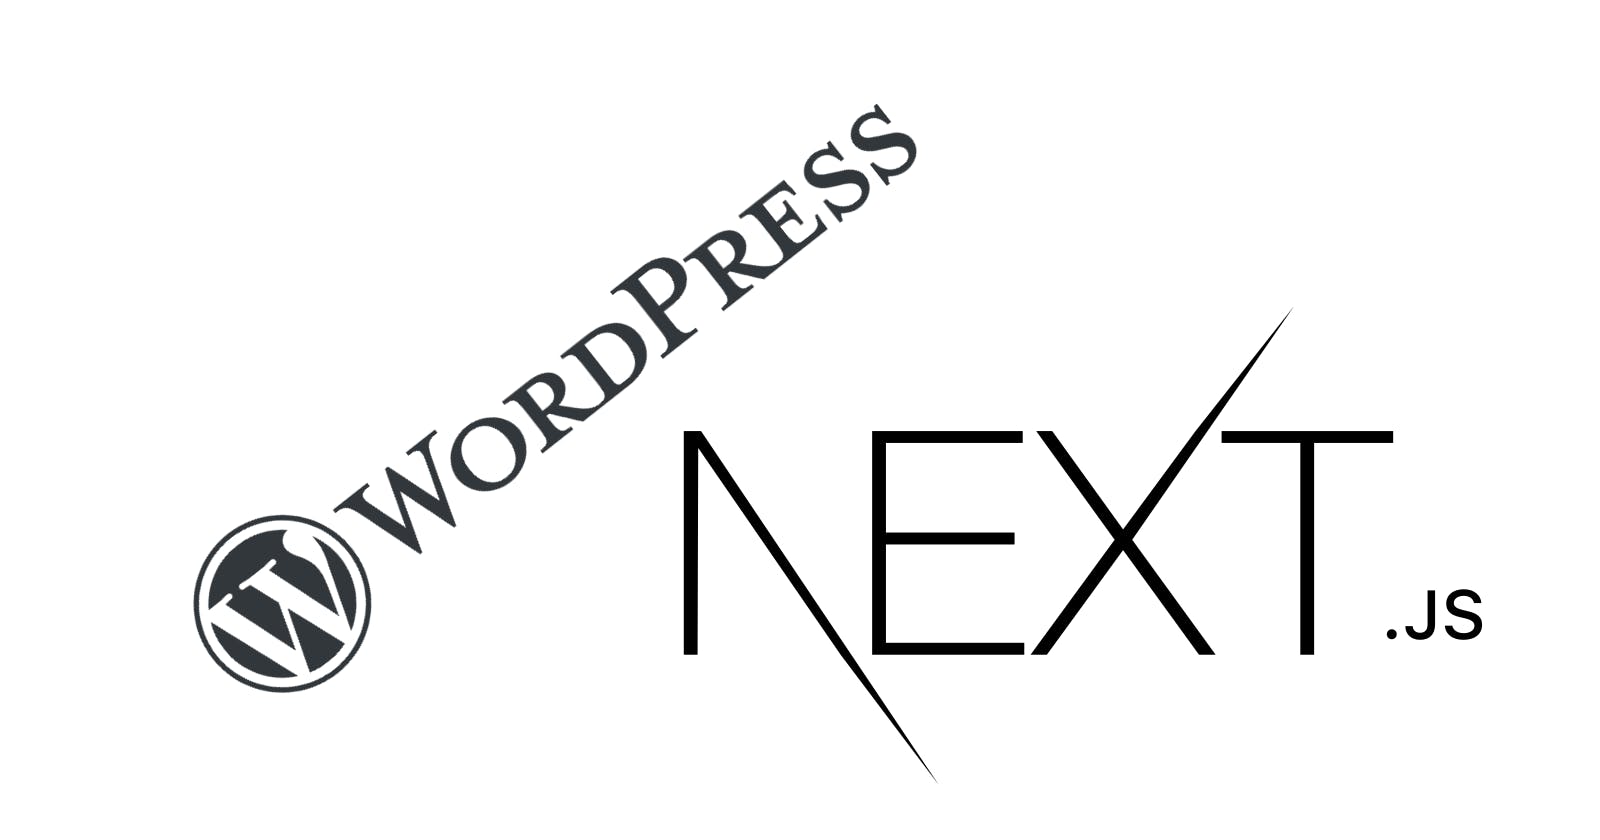 How to configure WordPress in Nextjs using REST API